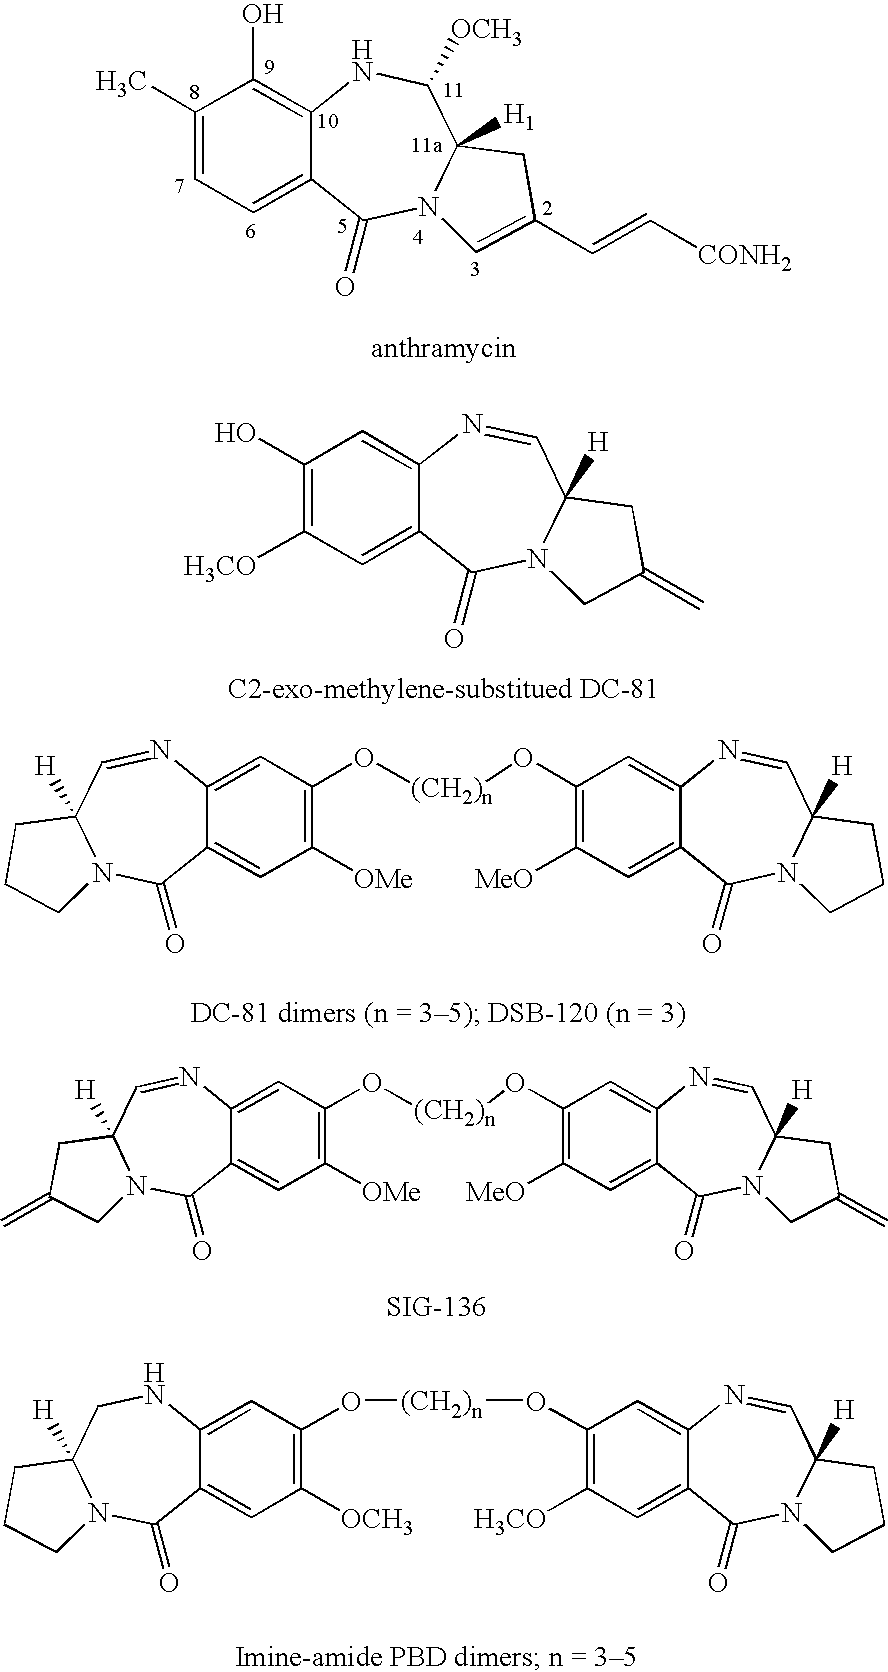 Pyrene-linked pyrrolo[2,1-c][1,4]benzodiazepine hybrids useful as anti-cancer agents